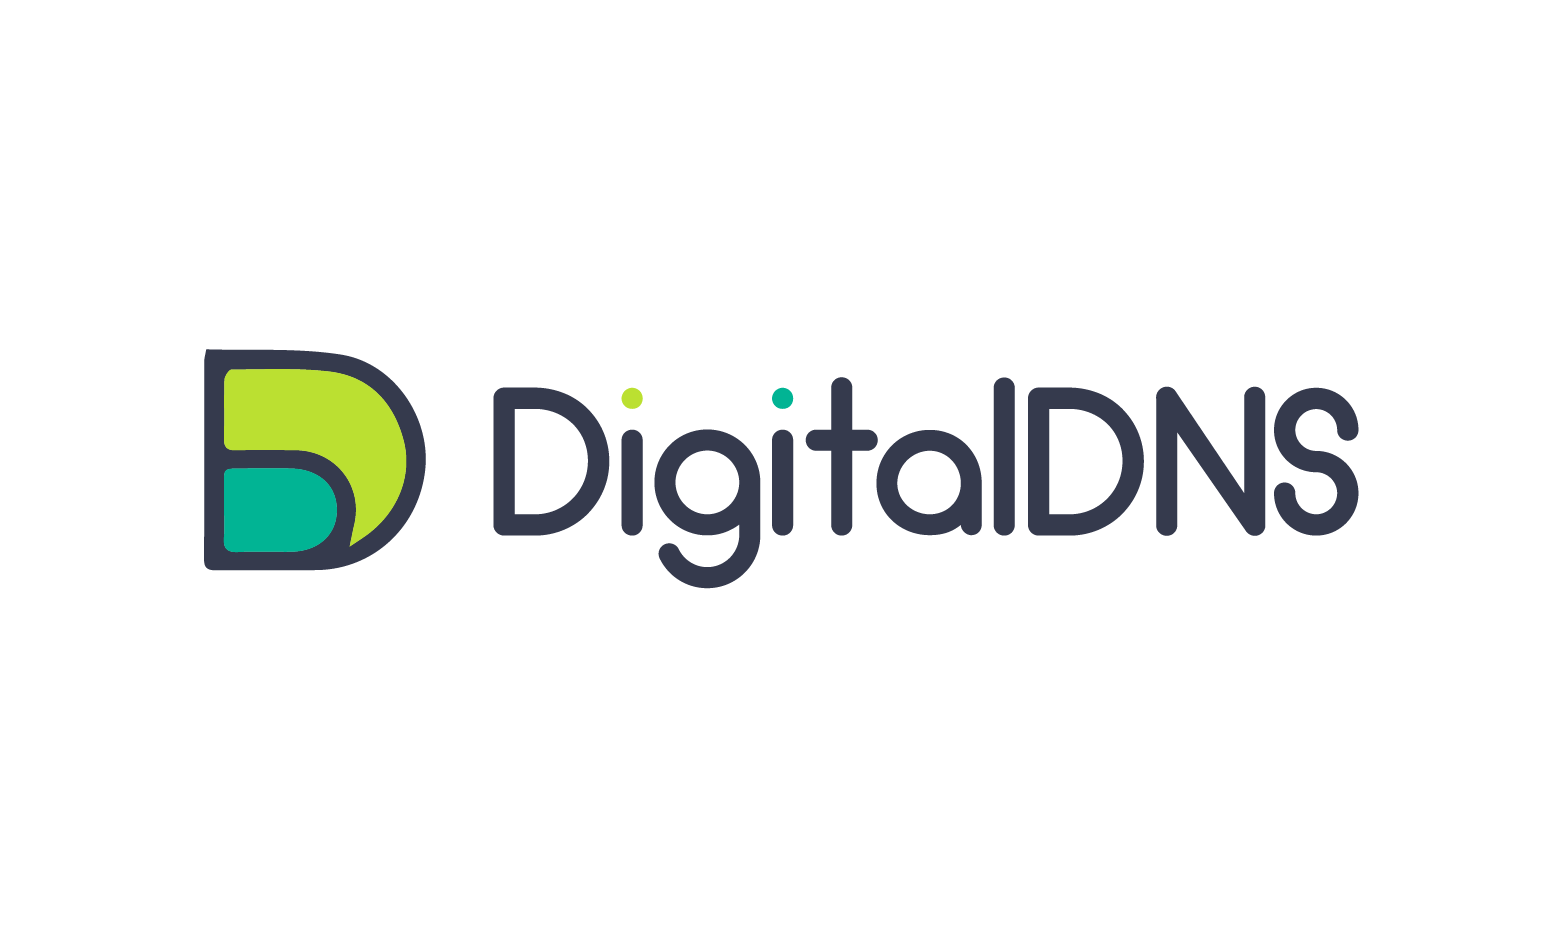 DigitalDNS.com - Creative brandable domain for sale